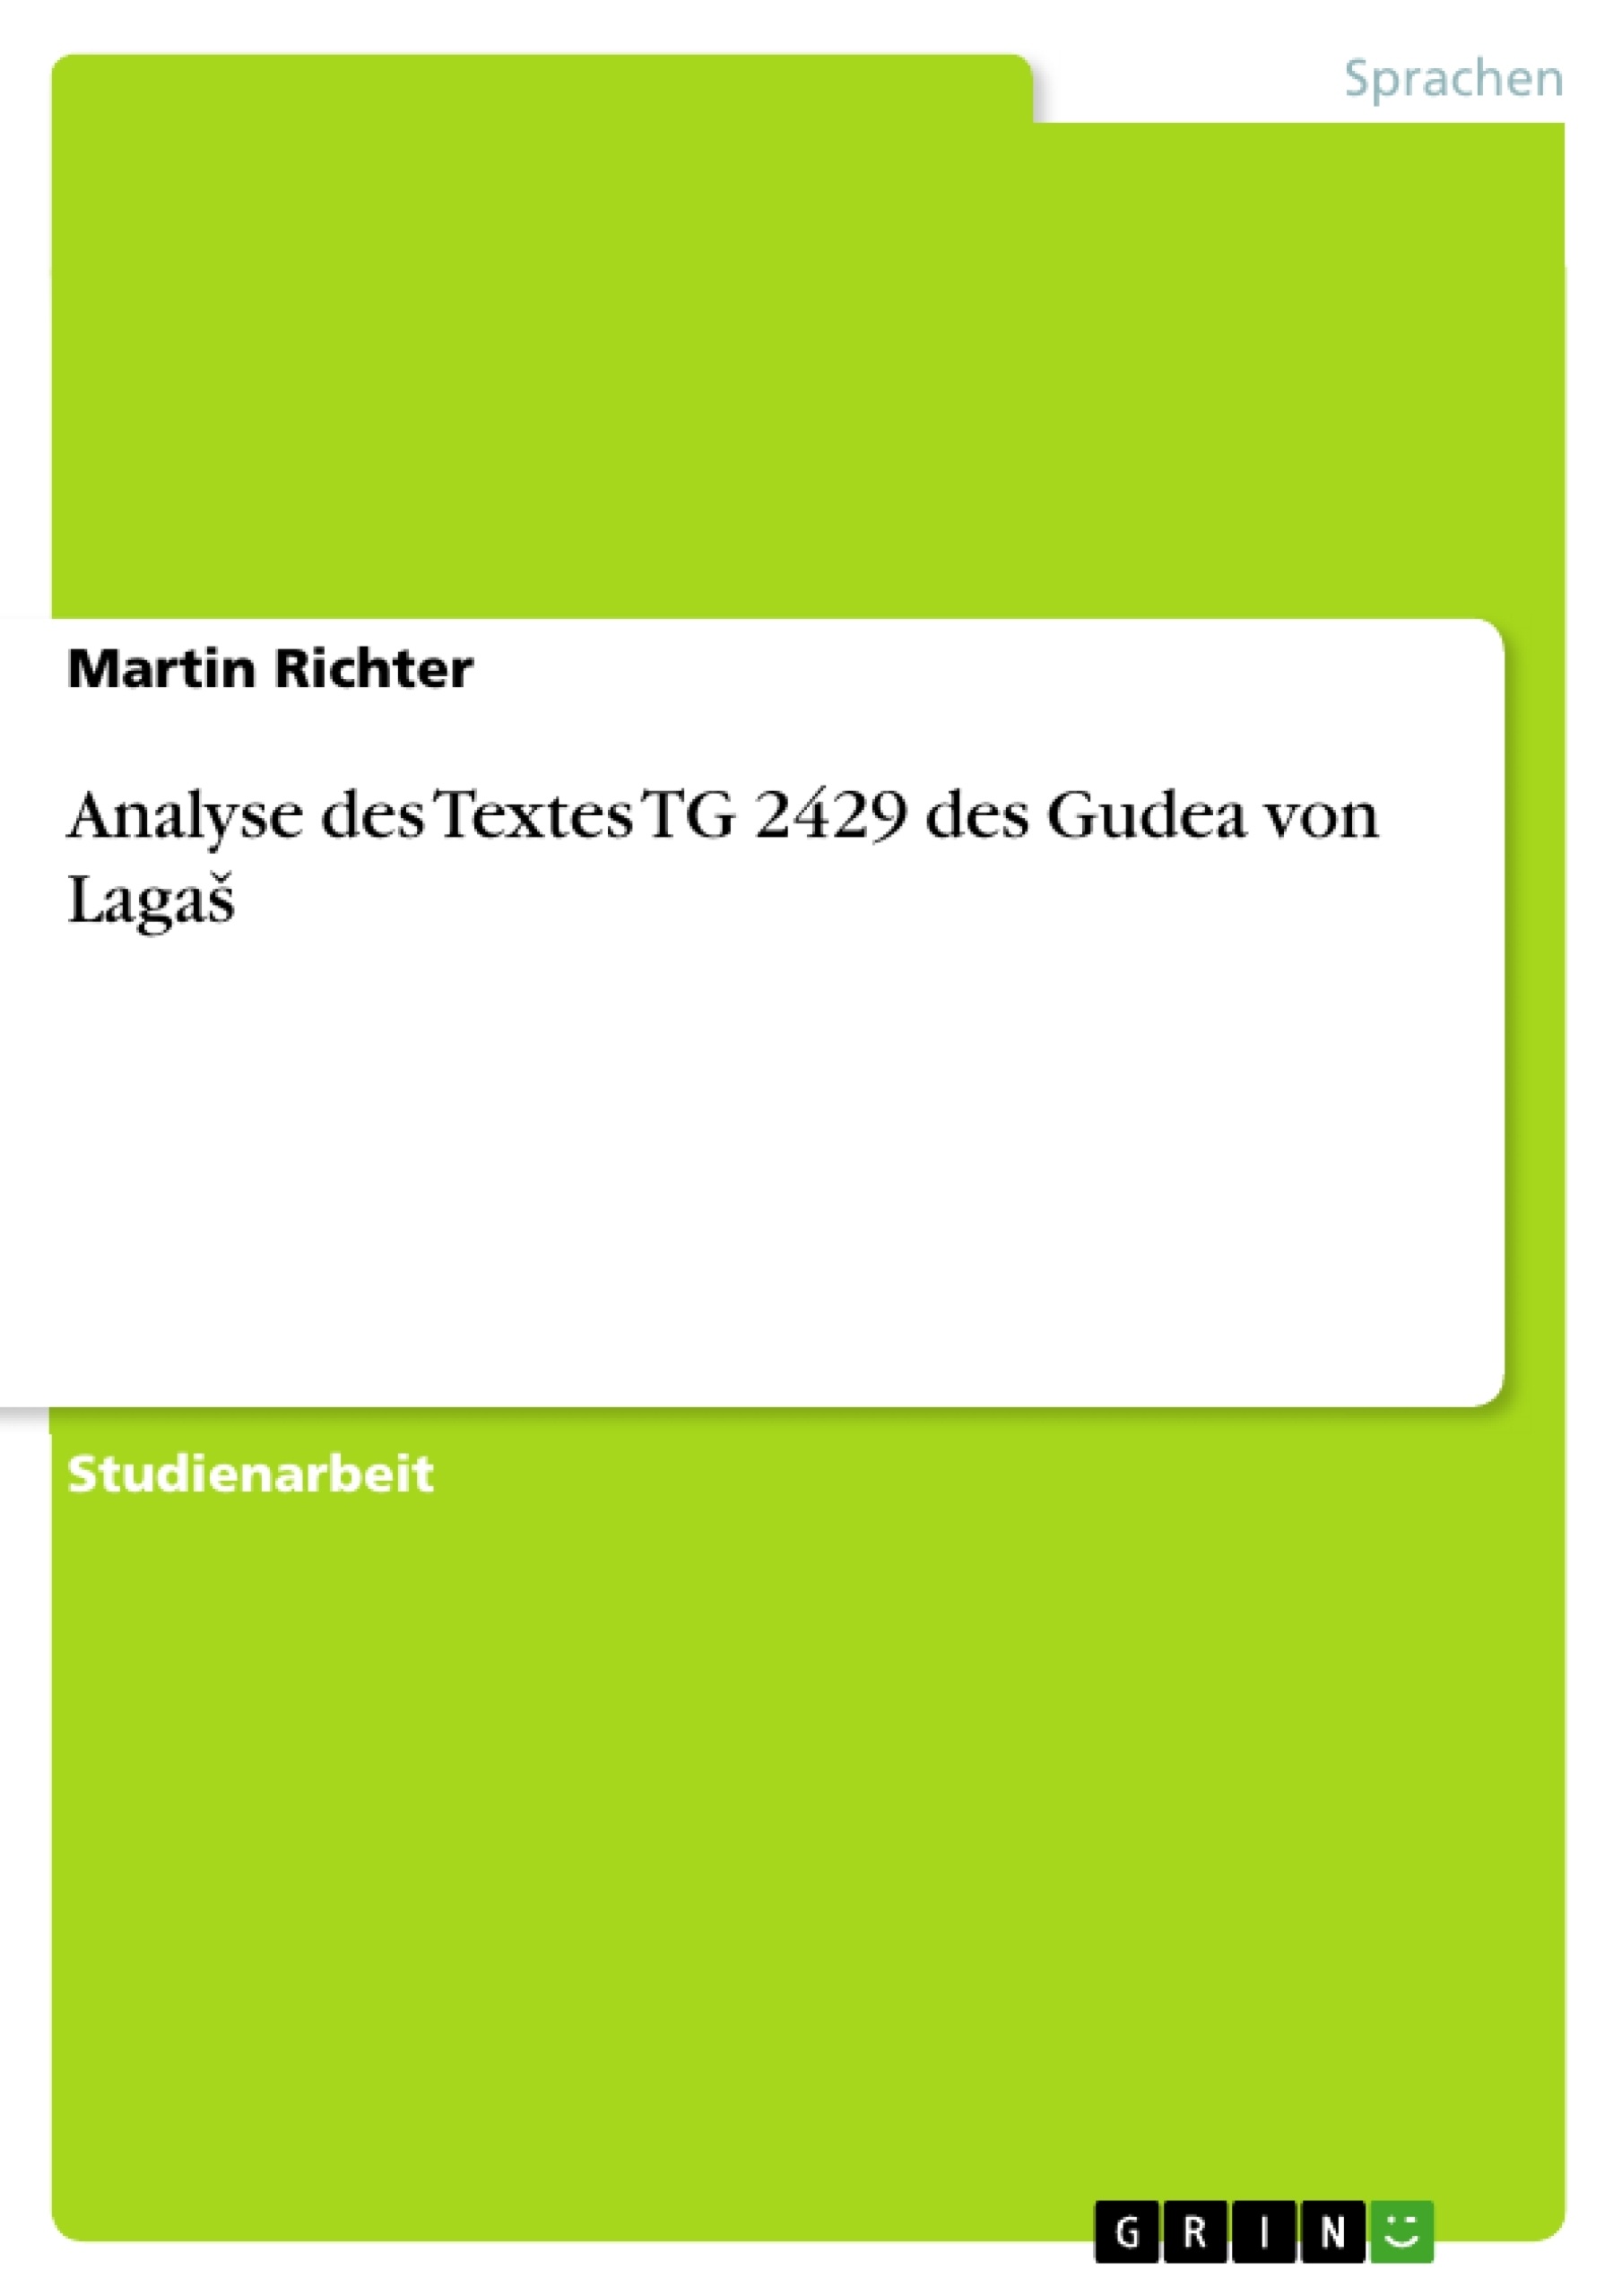 Title: Analyse des Textes TG 2429 des Gudea von Lagaš